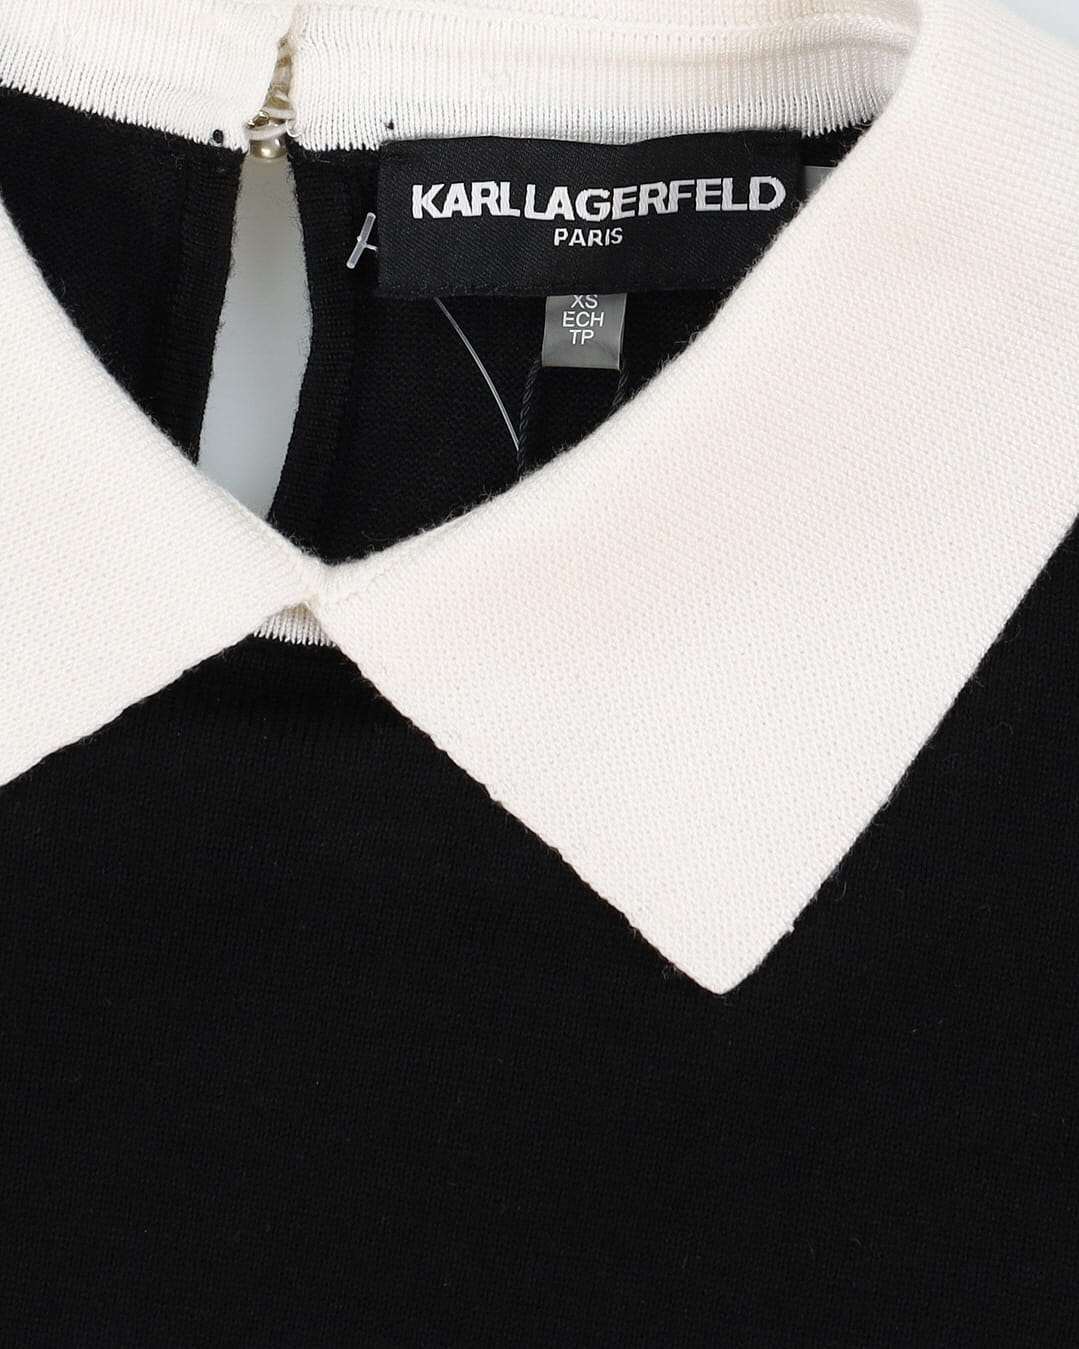 Karl Lagerfeld Lightweight Knit Collared Top - XS